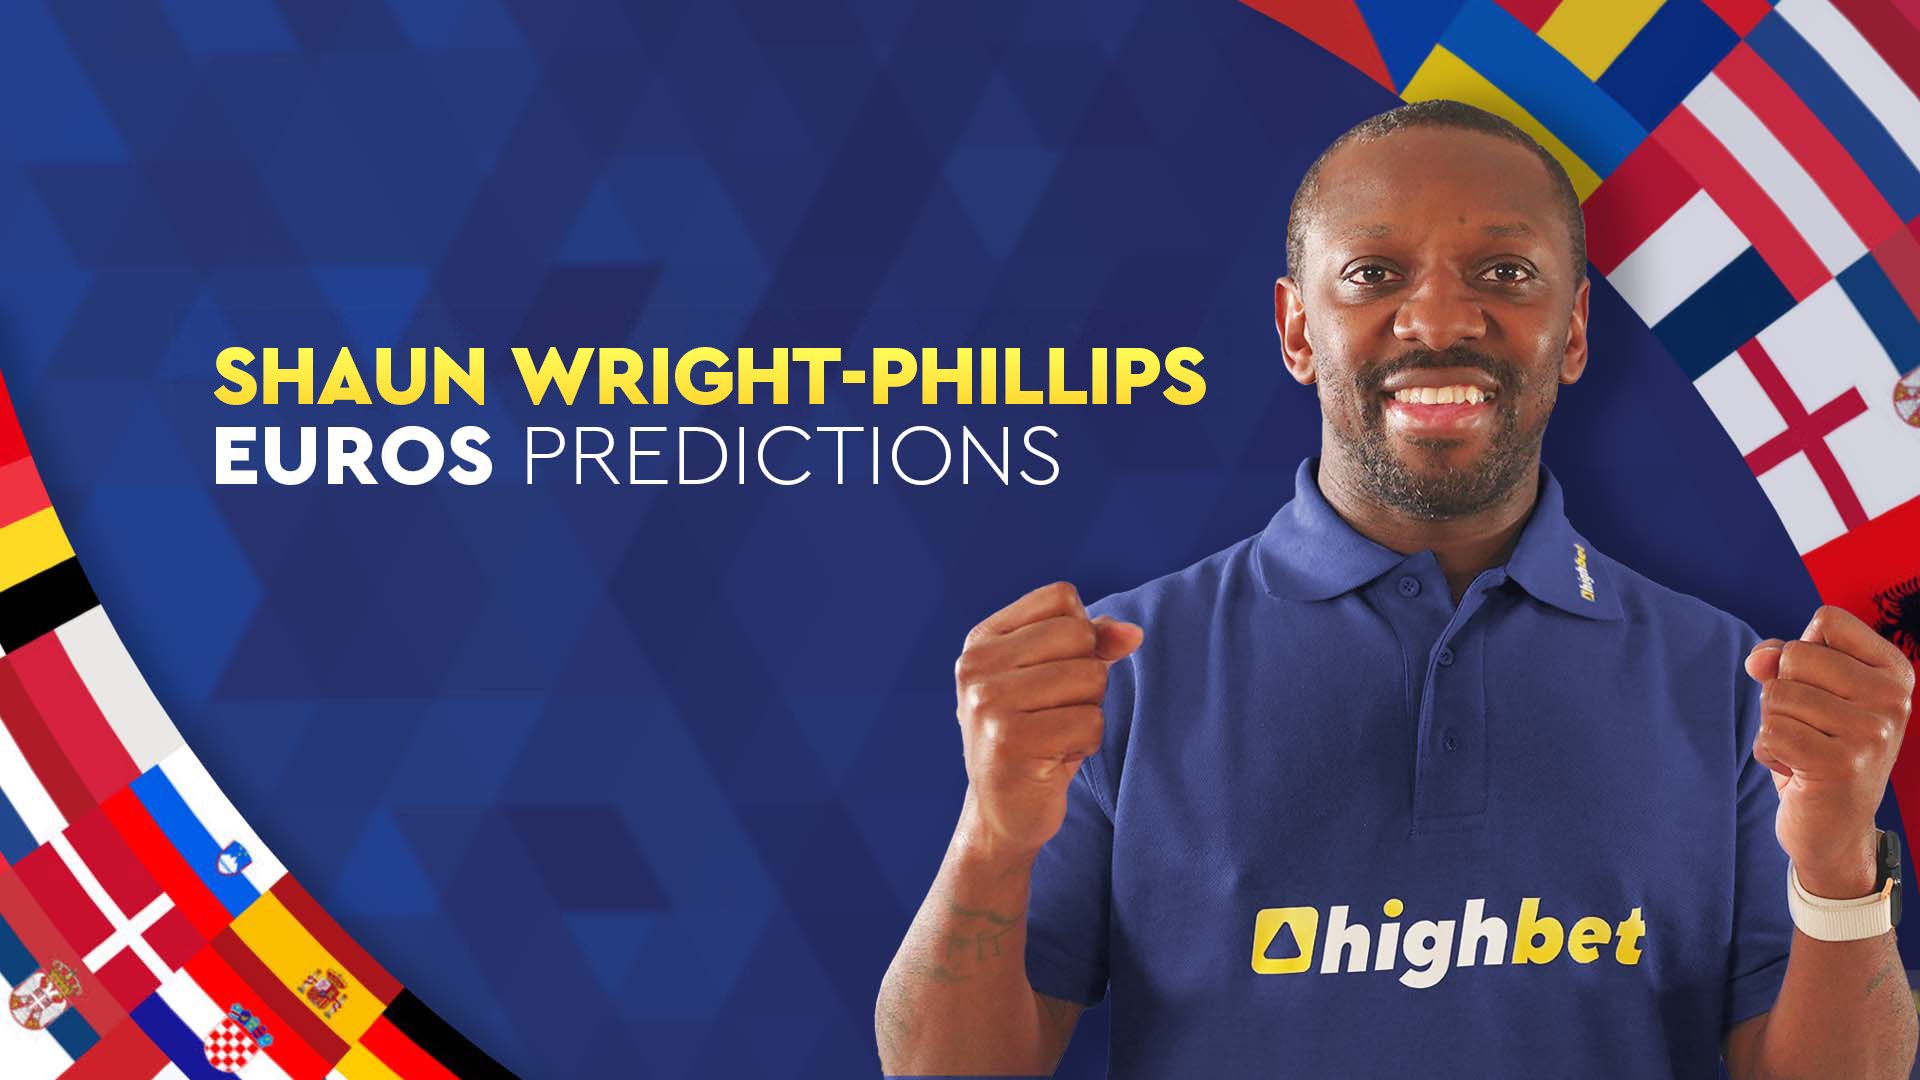 Video: Shaun Wright-Phillips Euros Predictions